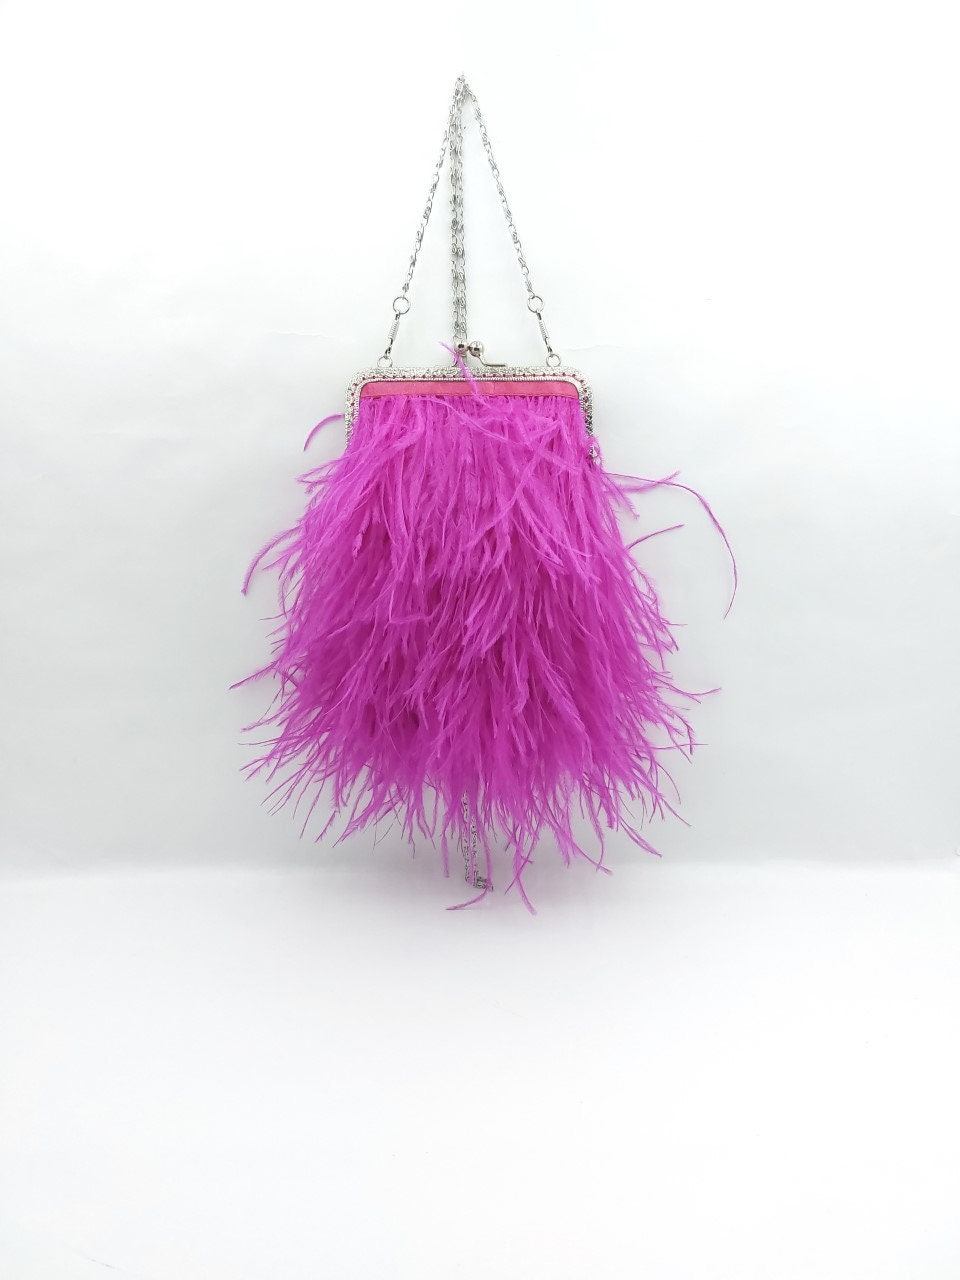 SurpriseShop Ladies Waterproof Golf Cart Bag - Pink Feather